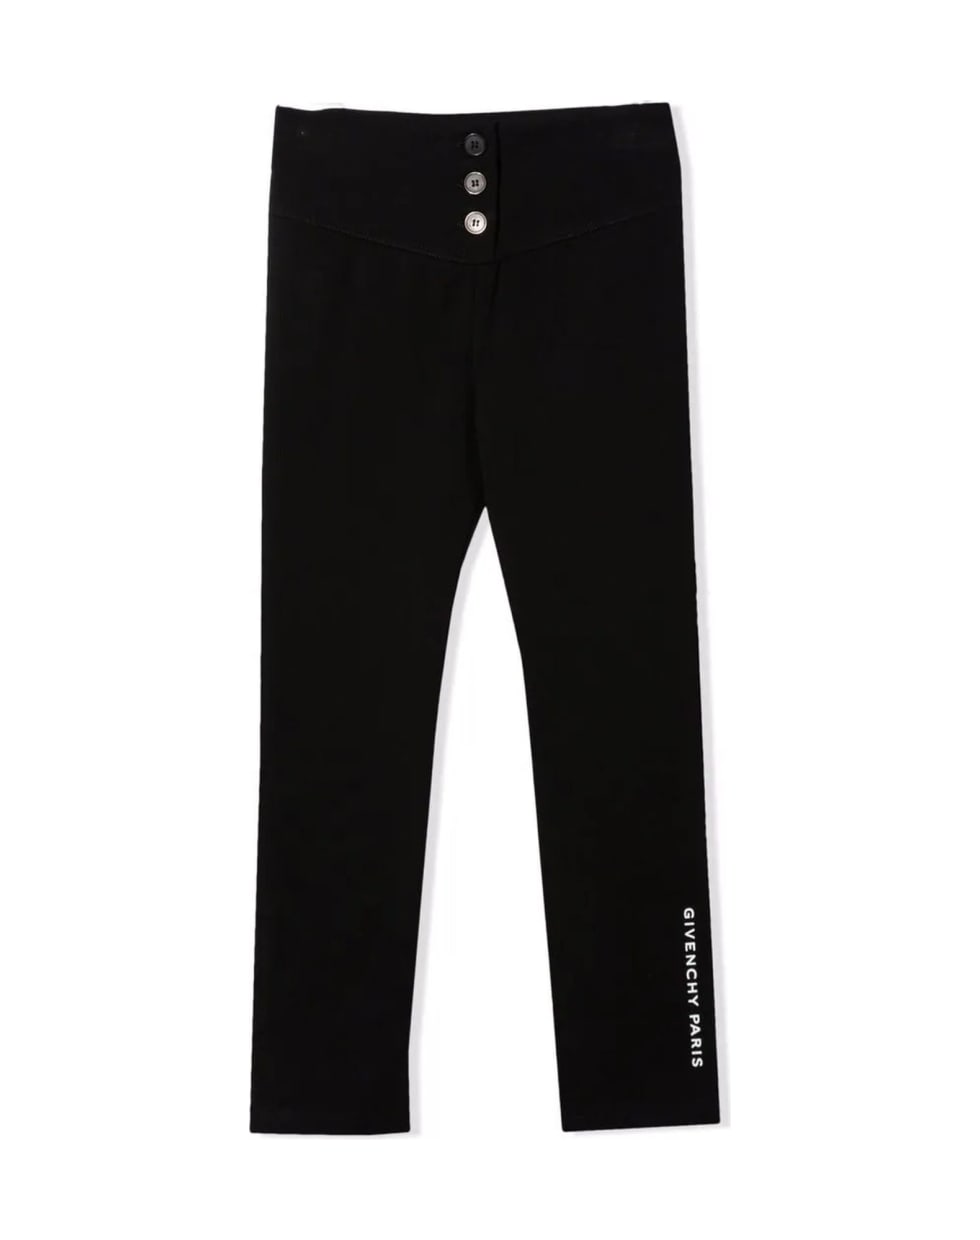 Givenchy Black Stretch Cotton Leggings - Nero